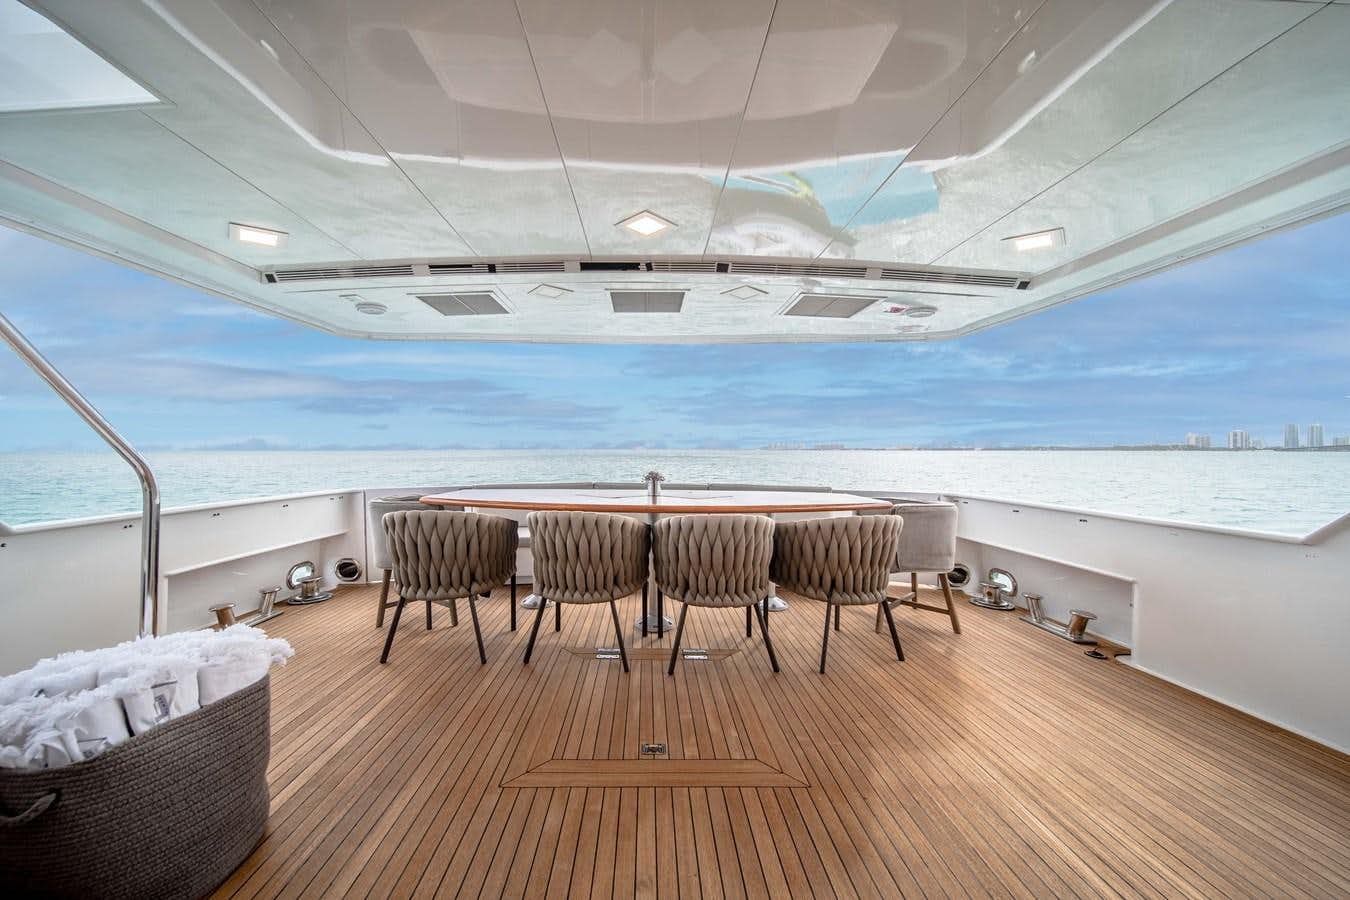 Ocean drive
Yacht for Sale